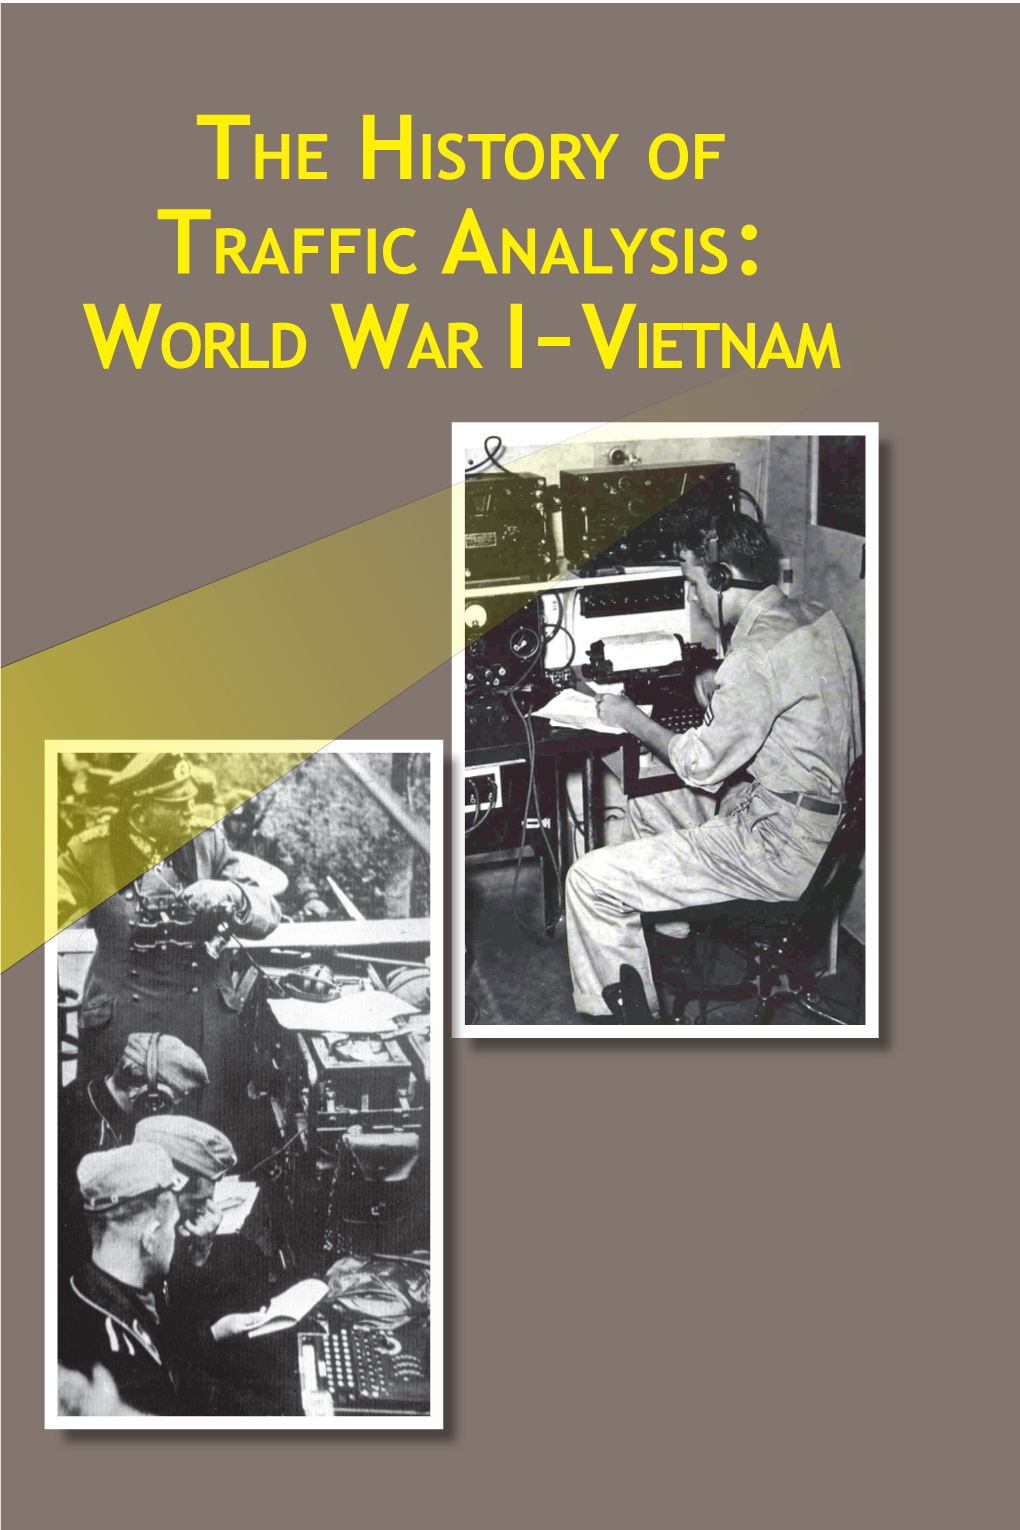 World War I – Vietnam